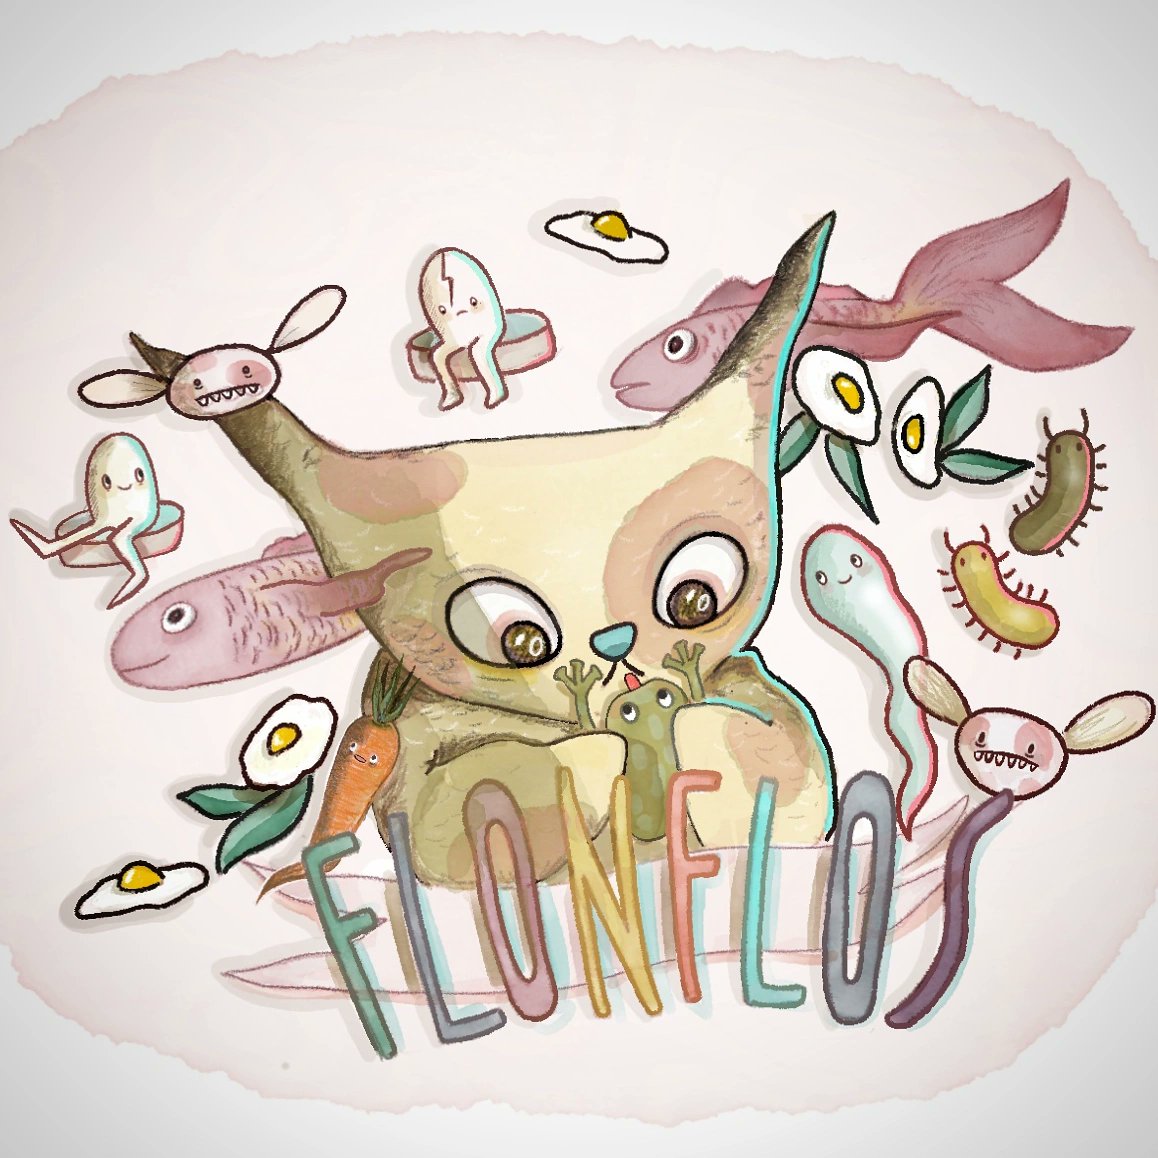 bodegón flonflo

#drawing #originalcharacter #artistsofinstagram #illustrationforchildren #surrealart #flonflos #ilustracion #artwork #drawingoftheday #characterconcept #friedeggs #eggflower #frienditos #ilustración #stickers #flonflos #bodegon #stilllife